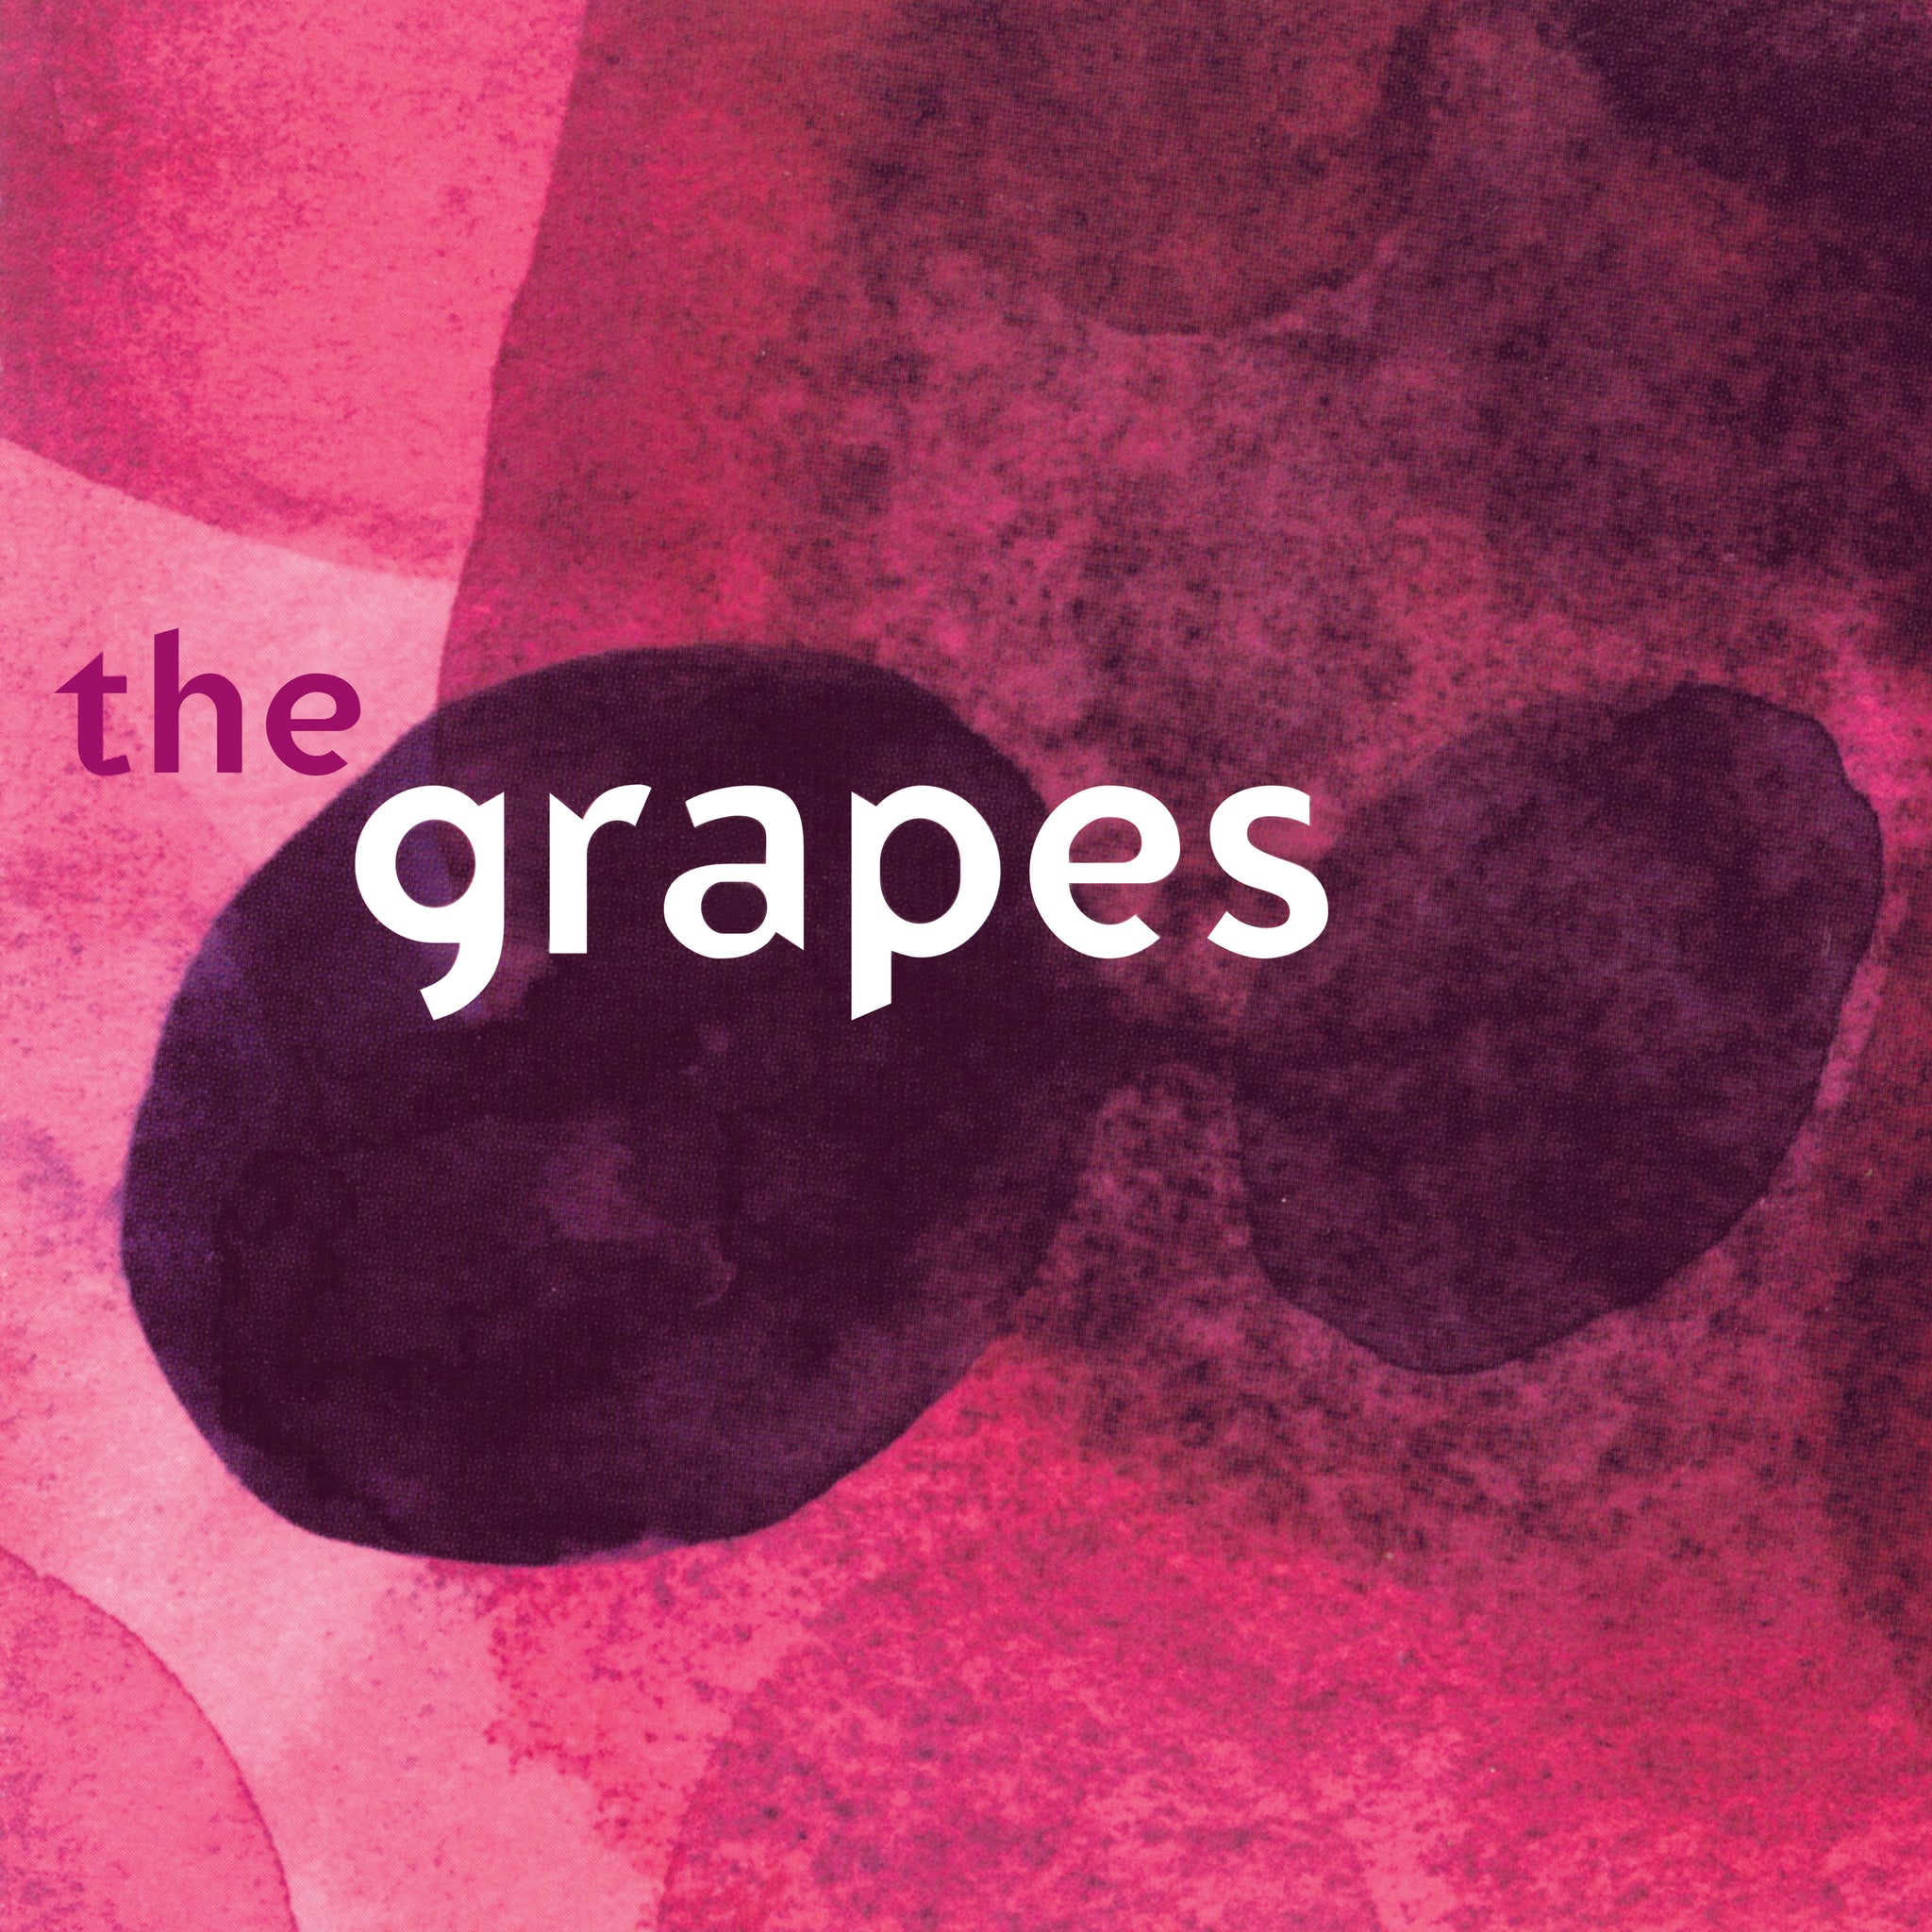 The Grapes - The Grapes (VINYL + LIMITED EDITION ART PRINTS BUNDLE)